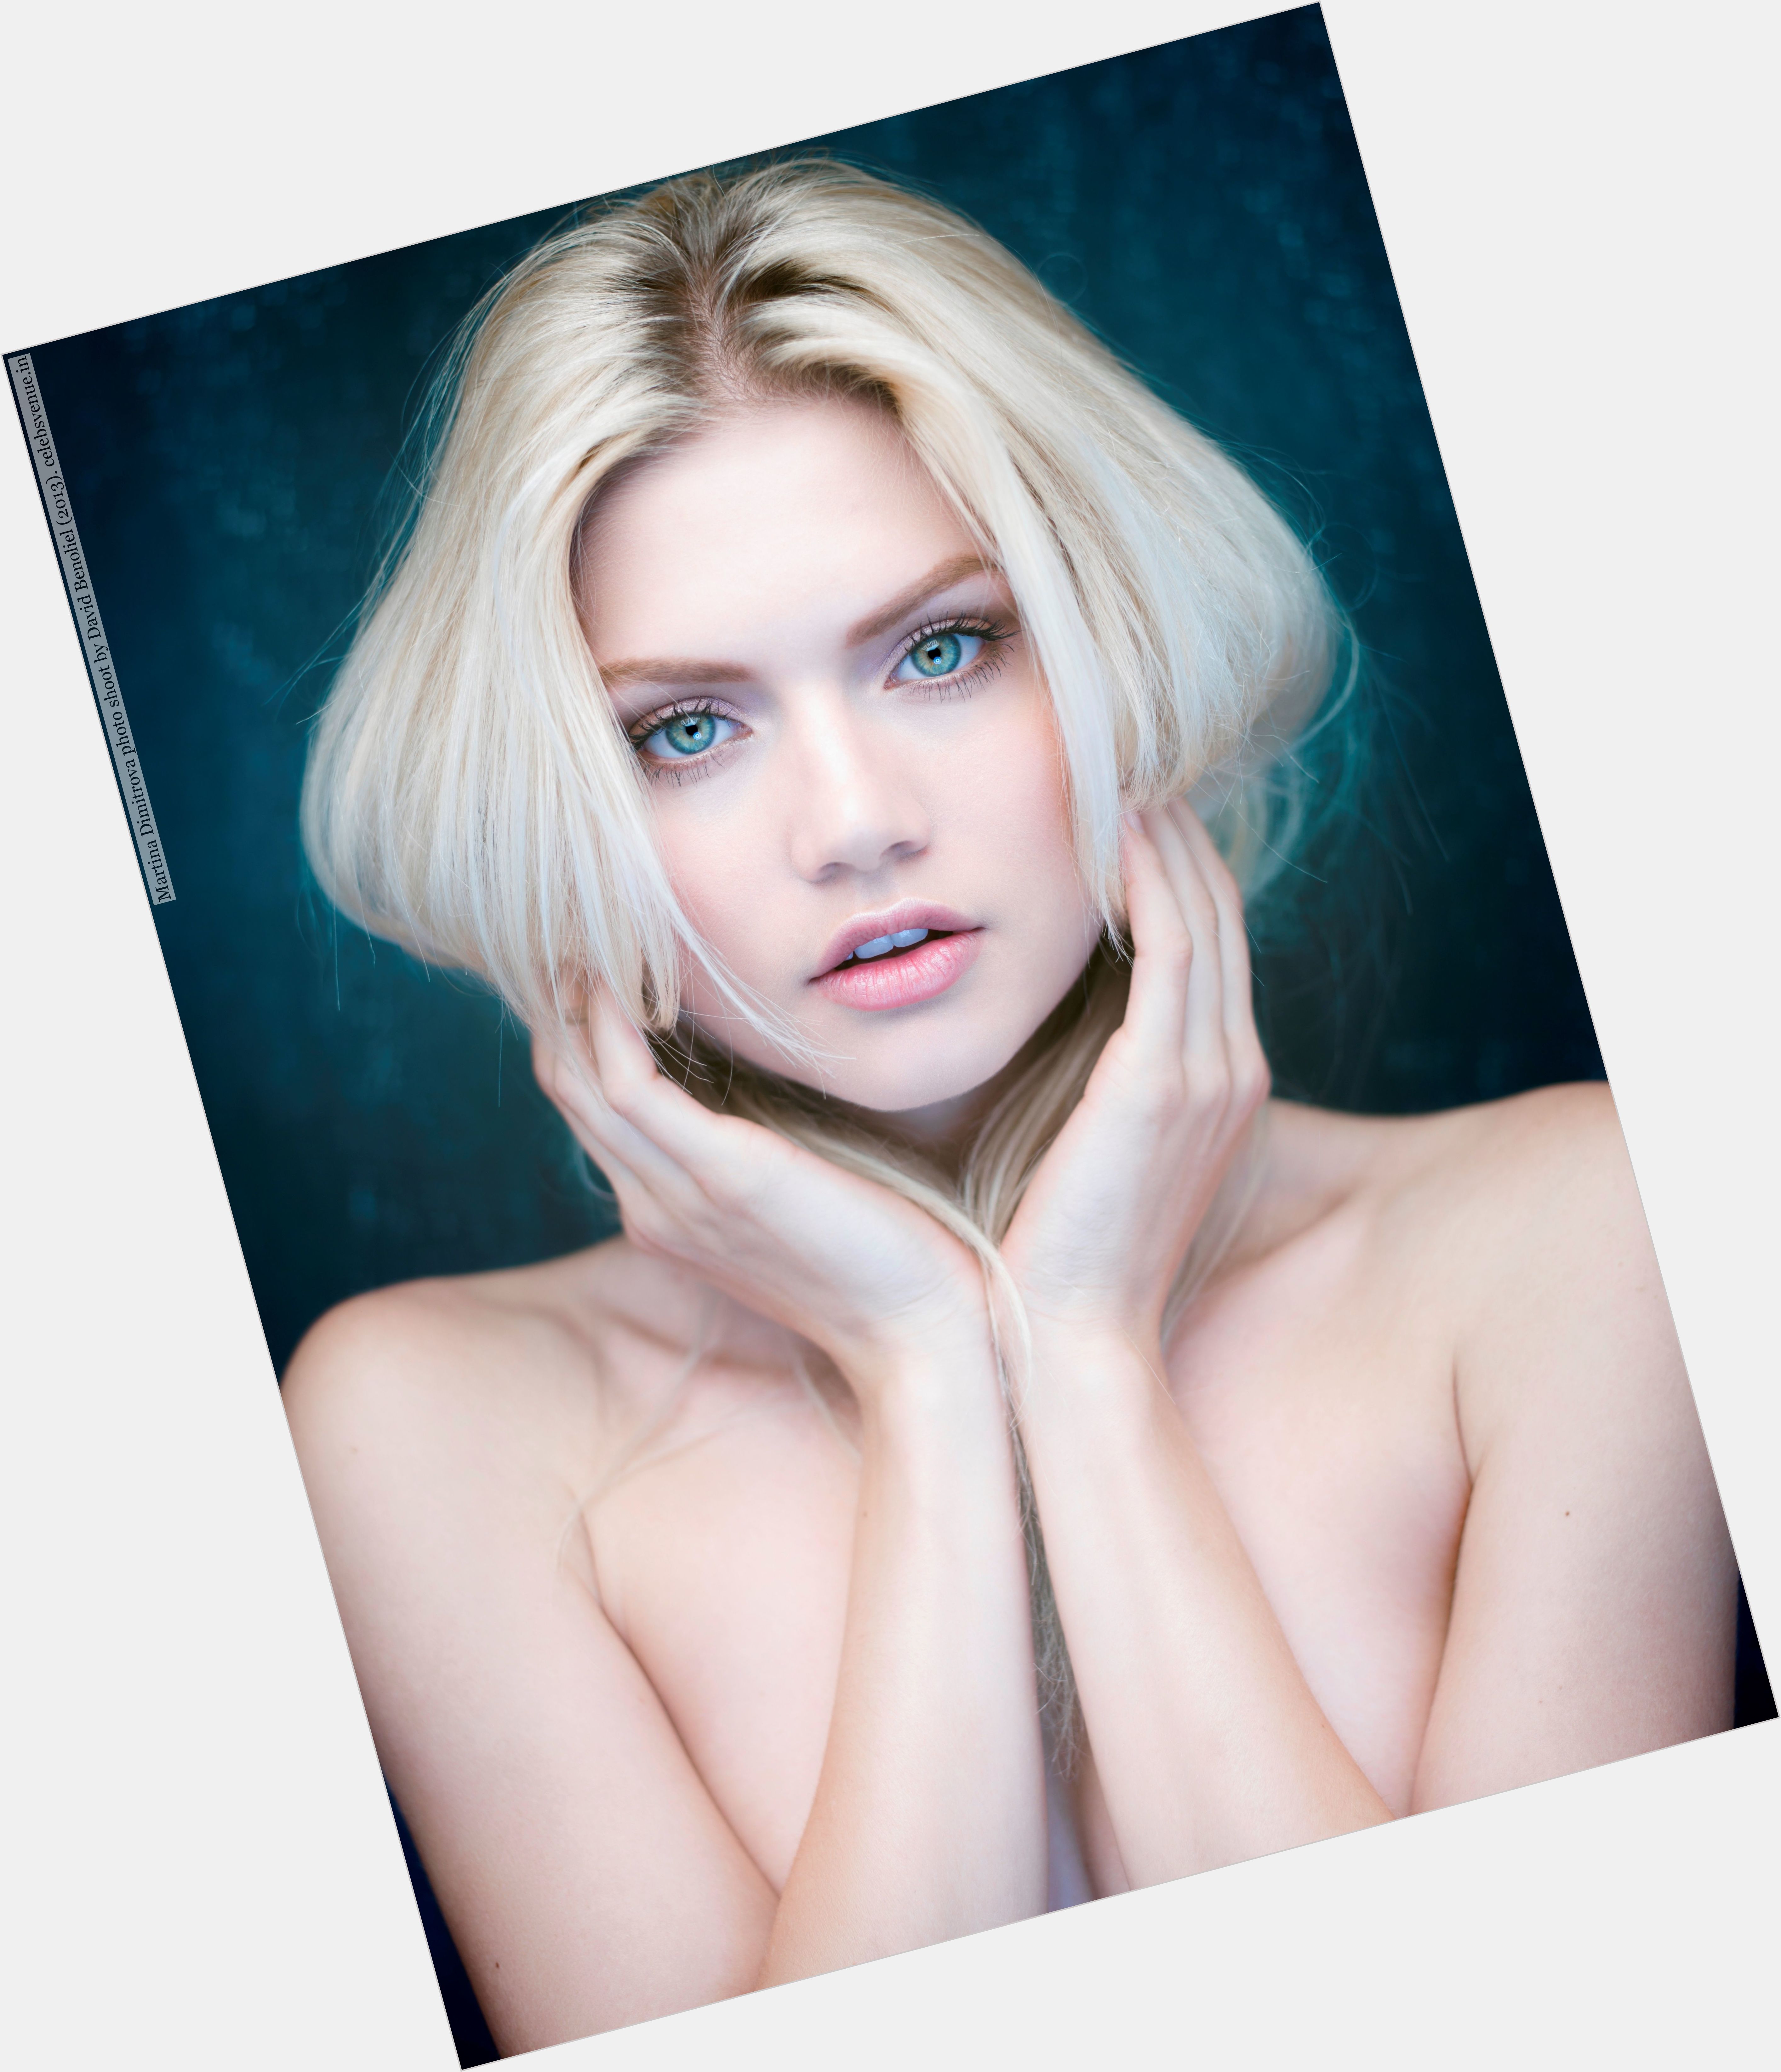 Martina Dimitrova Slim body,  blonde hair & hairstyles